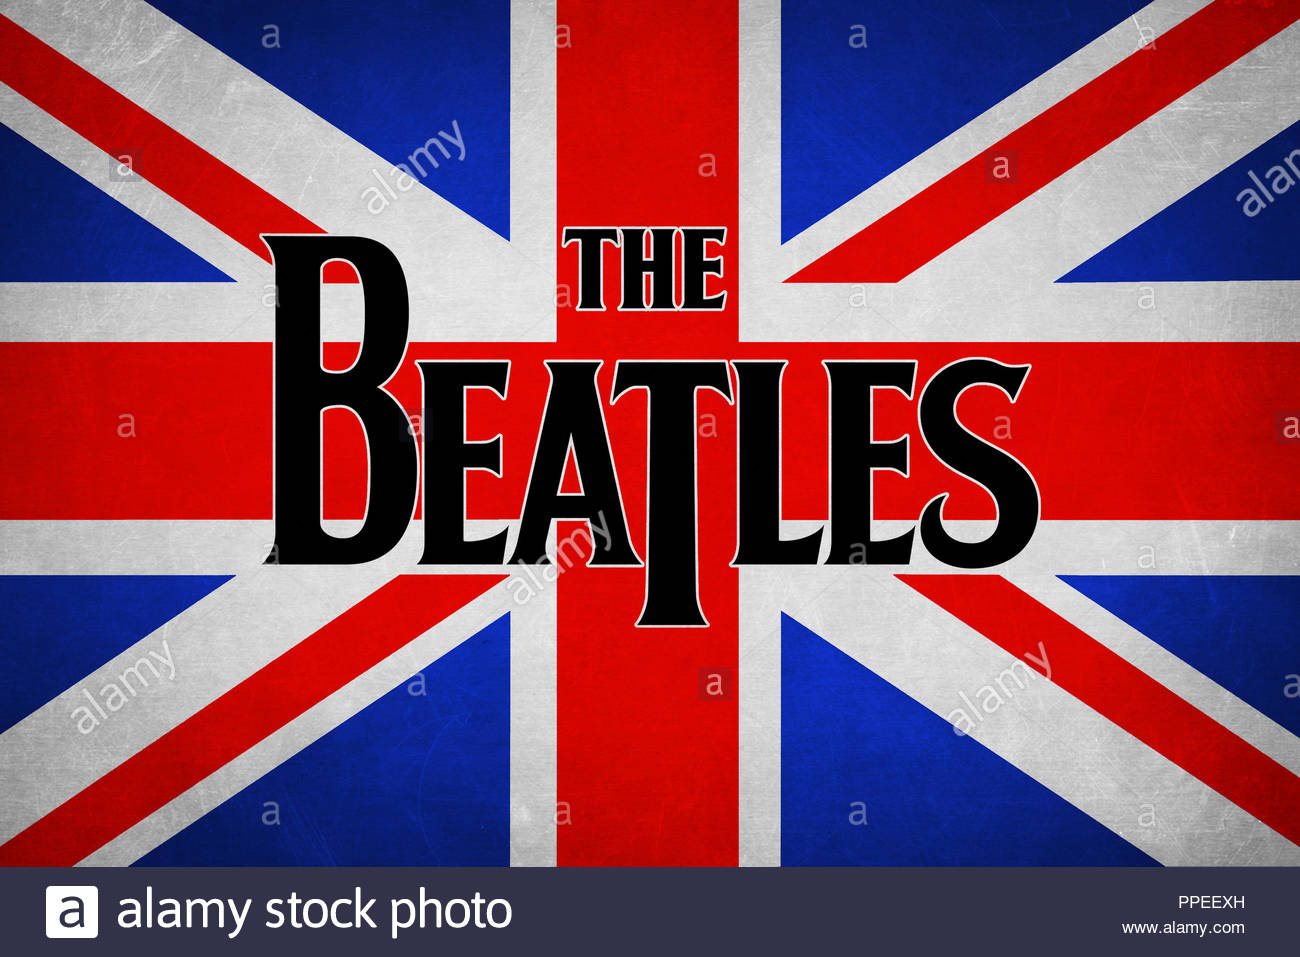 The Beatles Logo Sign Stock Photo 220365897 Alamy